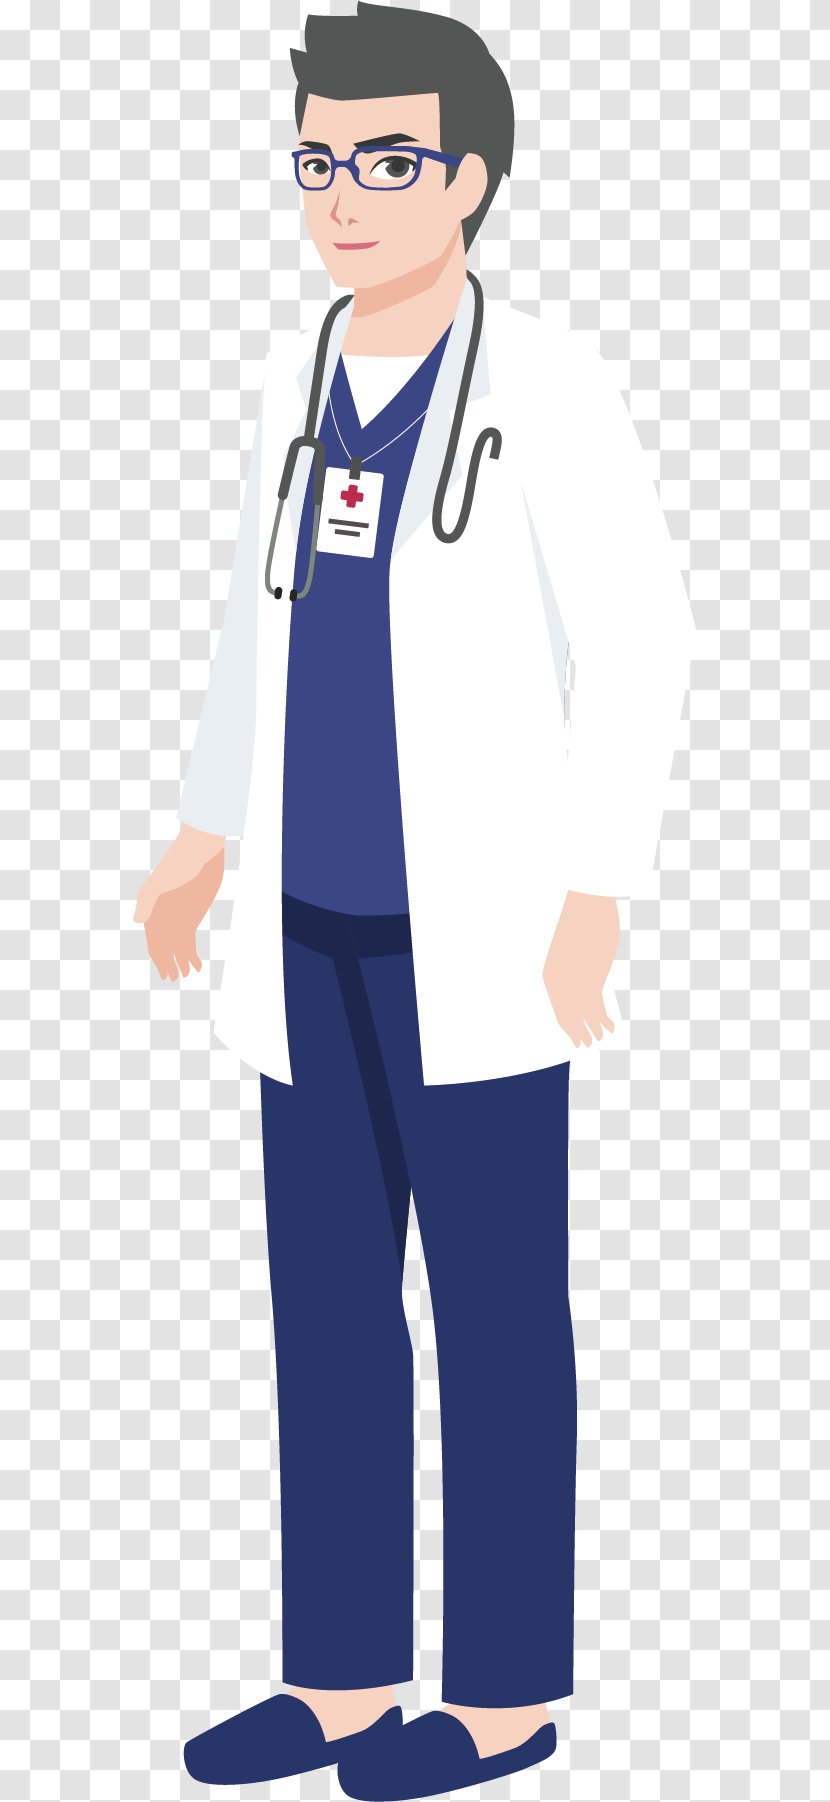 Cartoon Physician Illustration - Glasses - University Doctor Transparent PNG